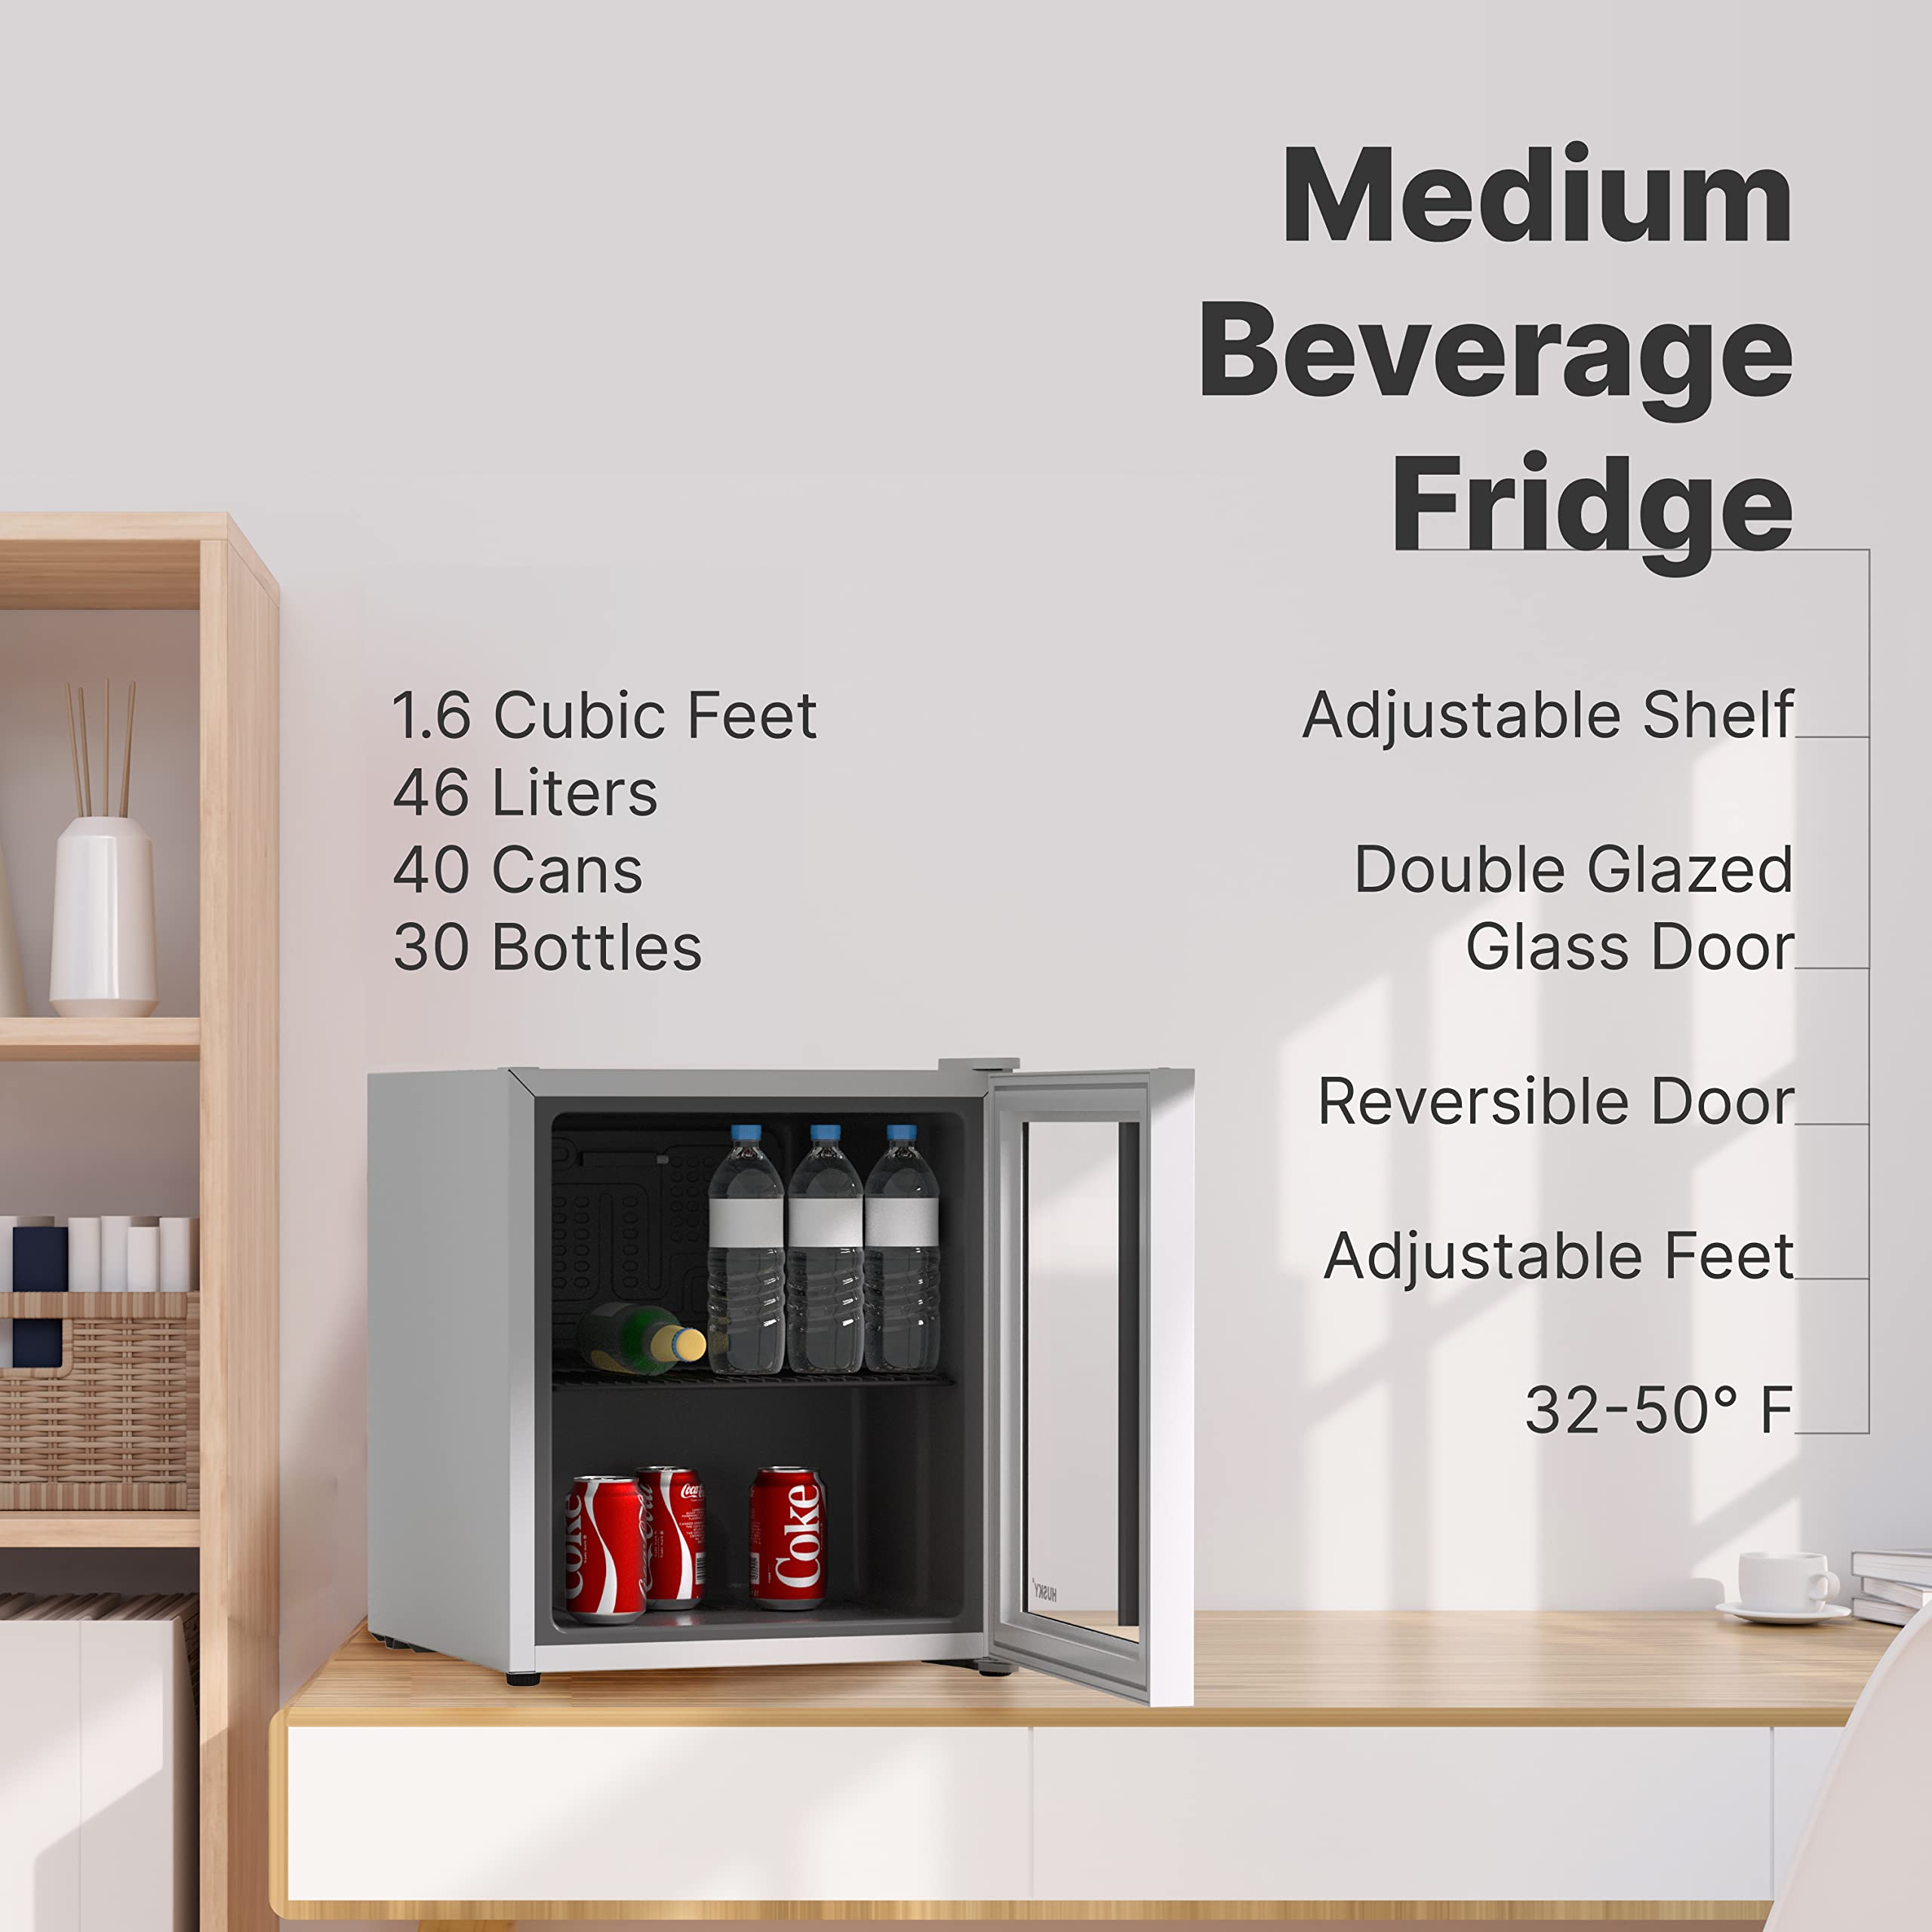 Husky Premium Countertop Mini Fridge, 46L Compact Beverage Refrigerator with 40 Can Capacity, Freestanding Mini Drink Fridge with Reversible Glass Door (White)